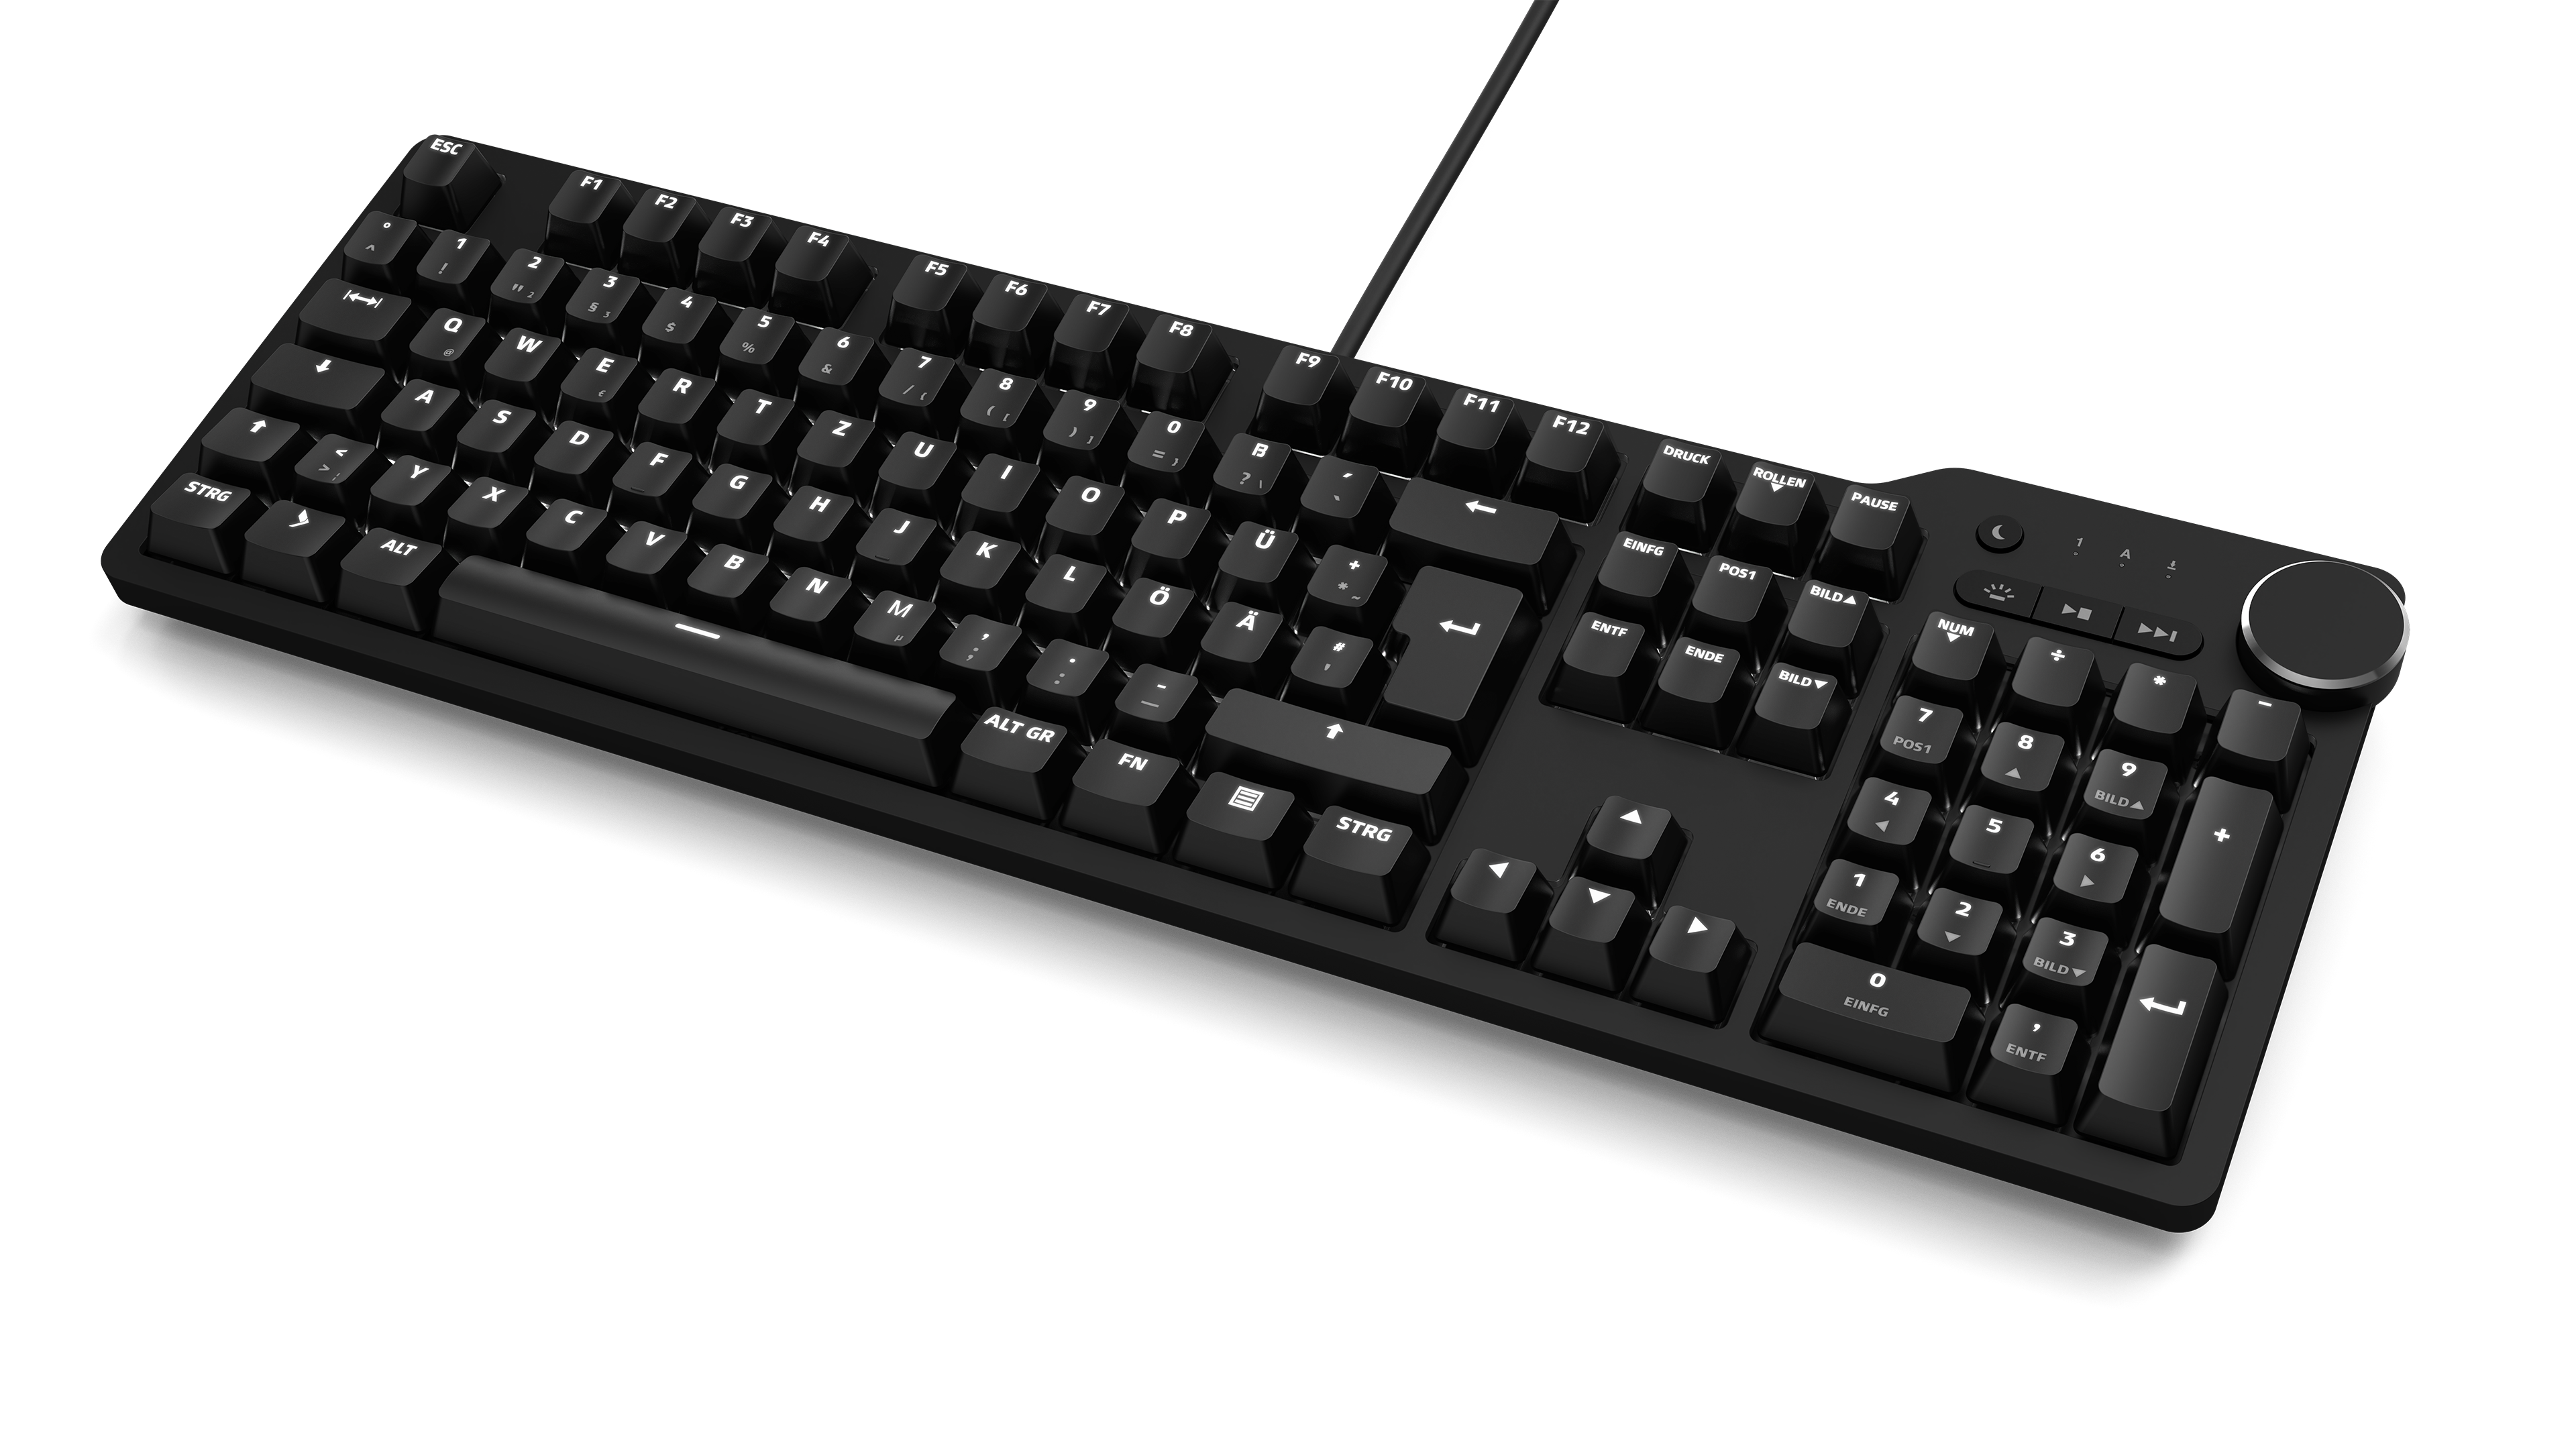 NEU: Das Keyboard 6 Pro